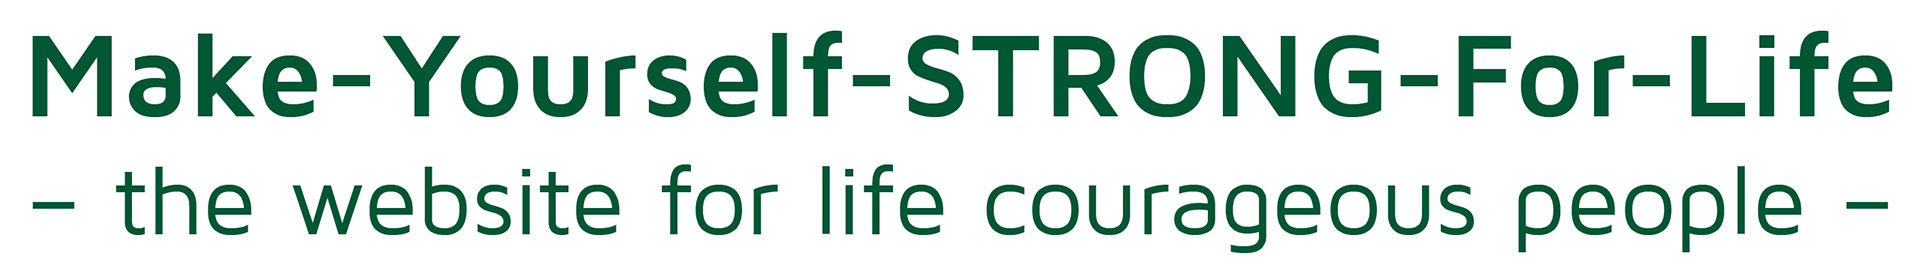 logo_make-yourself-strong-for-life